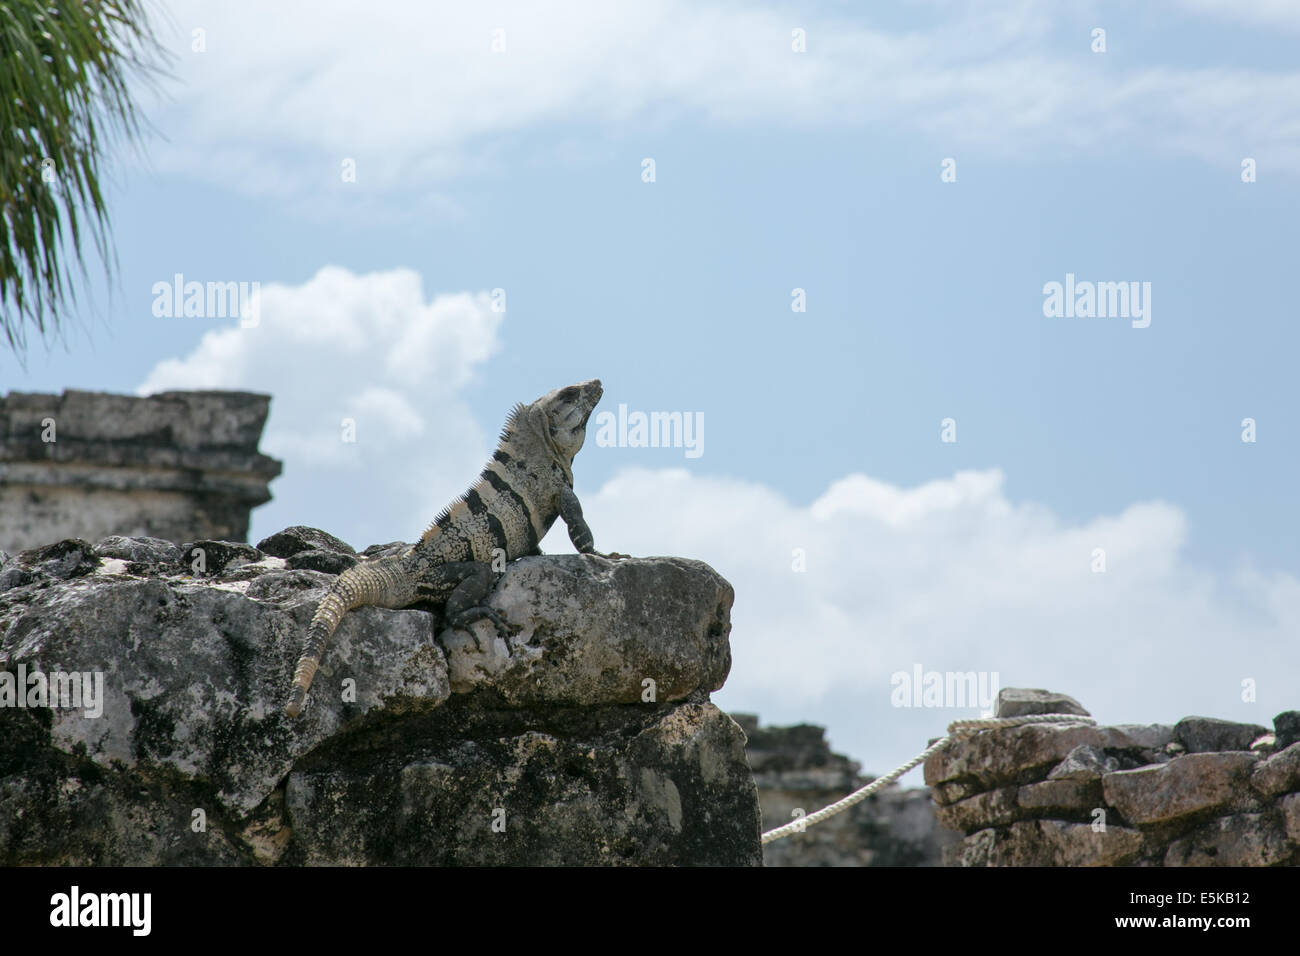 Iguana sunning on a rock wall at Tulum, Mexico. Stock Photo